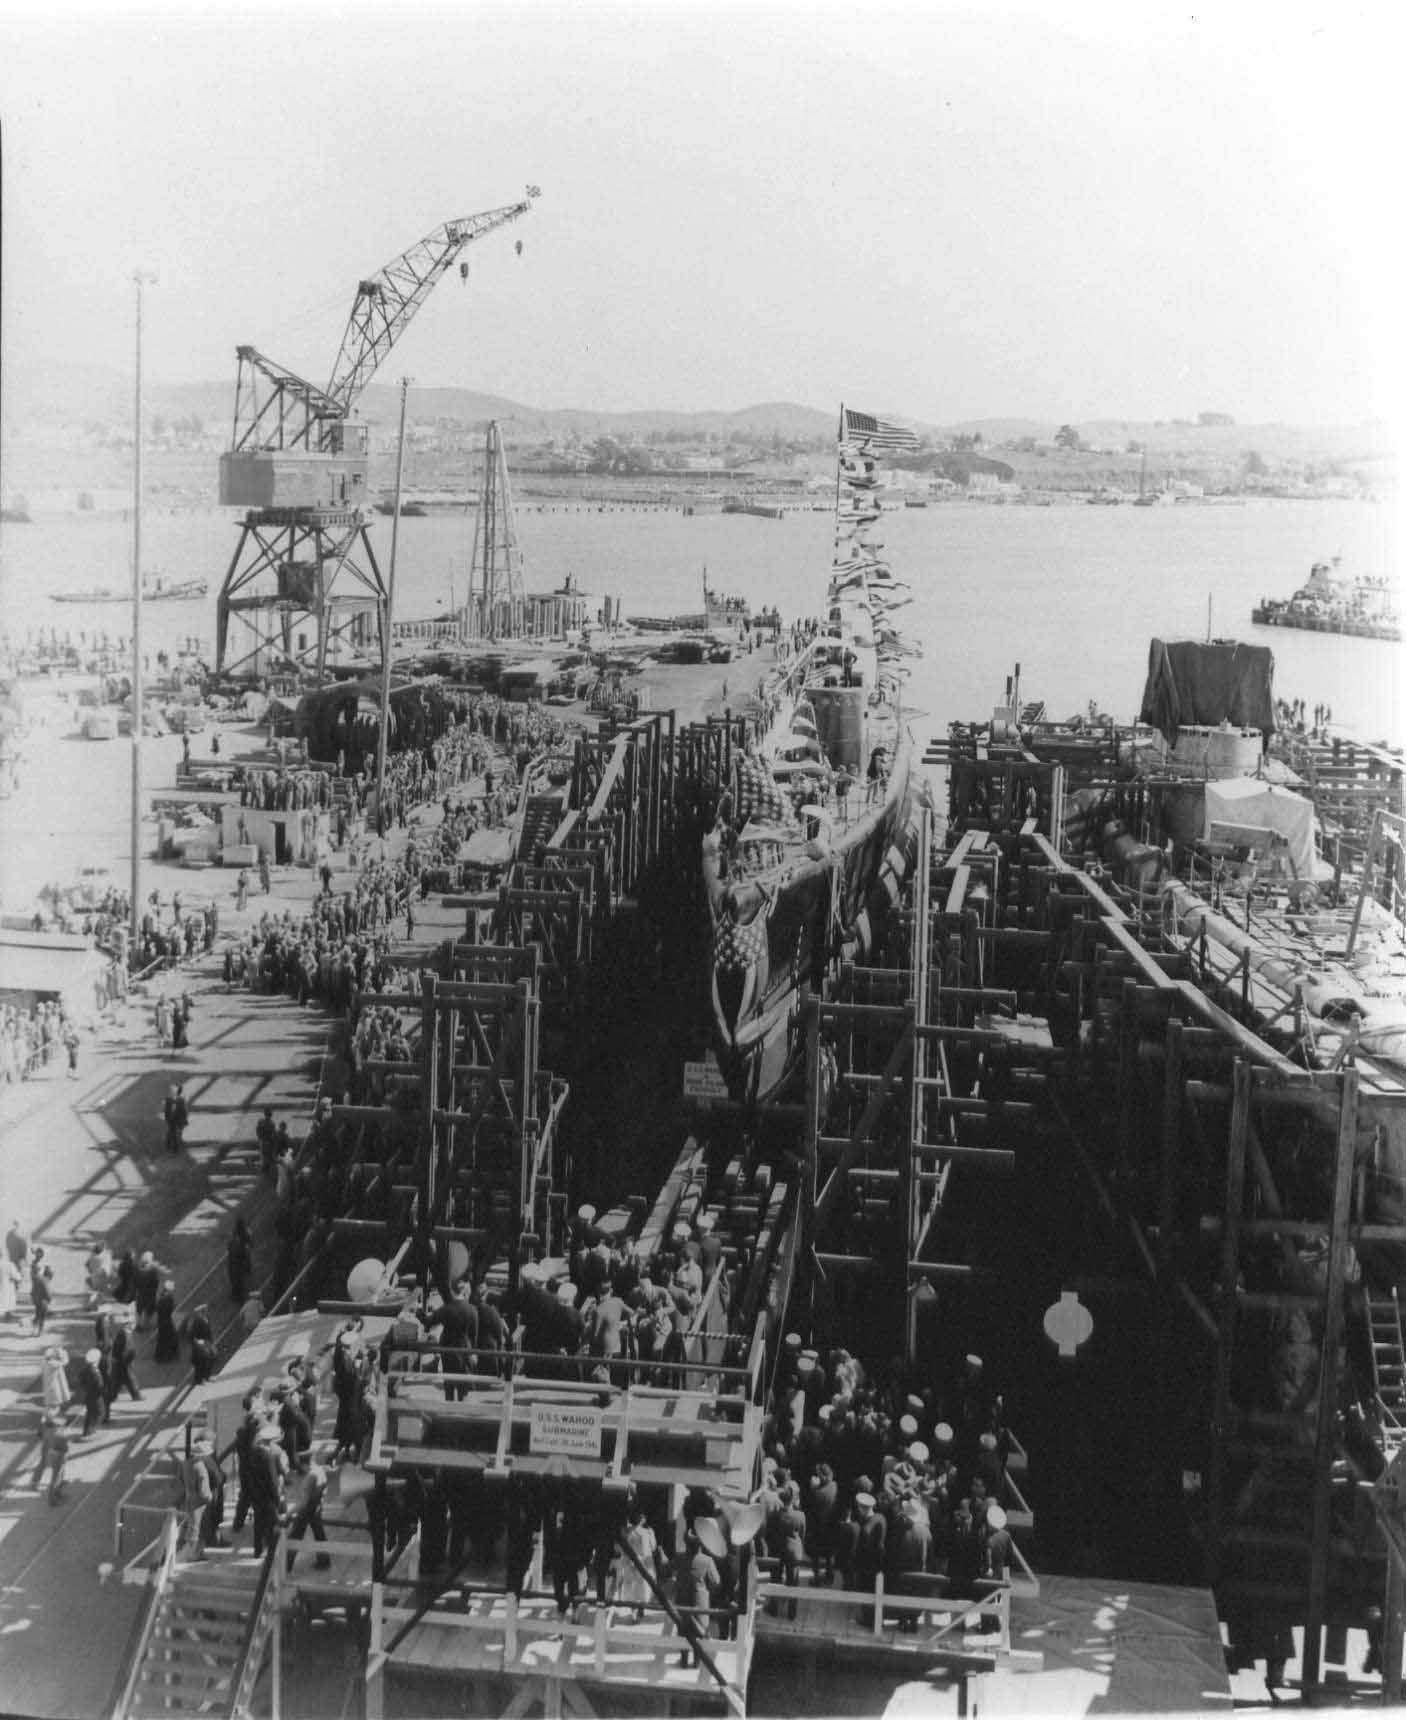 Launching of submarine Wahoo, Mare Island Navy Yard, Vallejo, California, United States, 14 Feb 1942, photo 2 of 4; note submarine Whale nearby